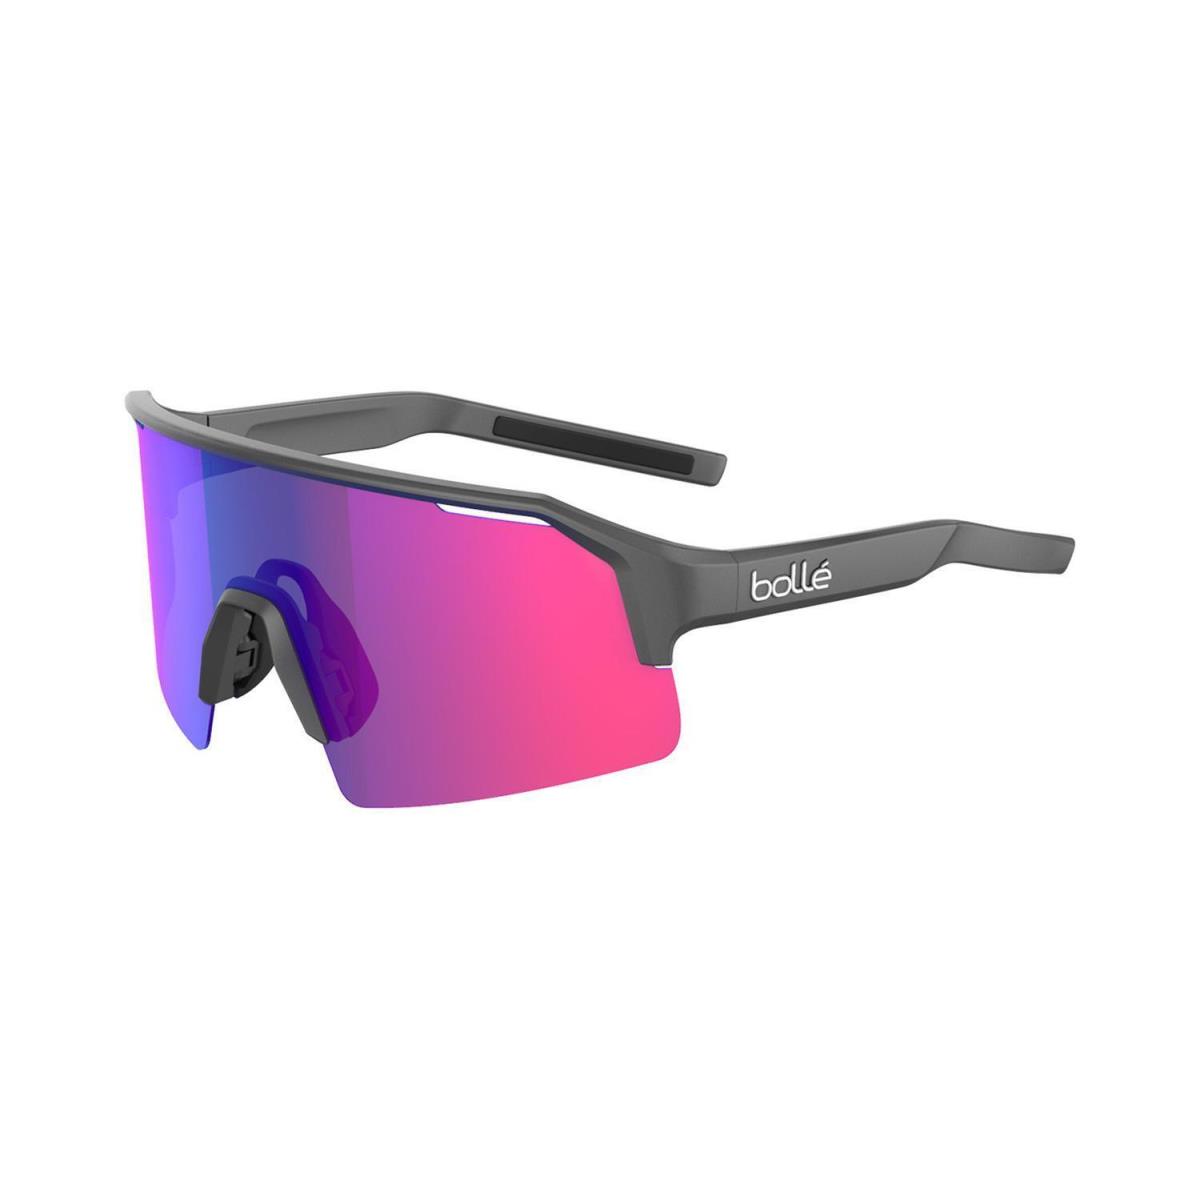 Bolle C-shifter Performance Sunglasses BS005005/TitaniumMatte/VoltUltraviolet